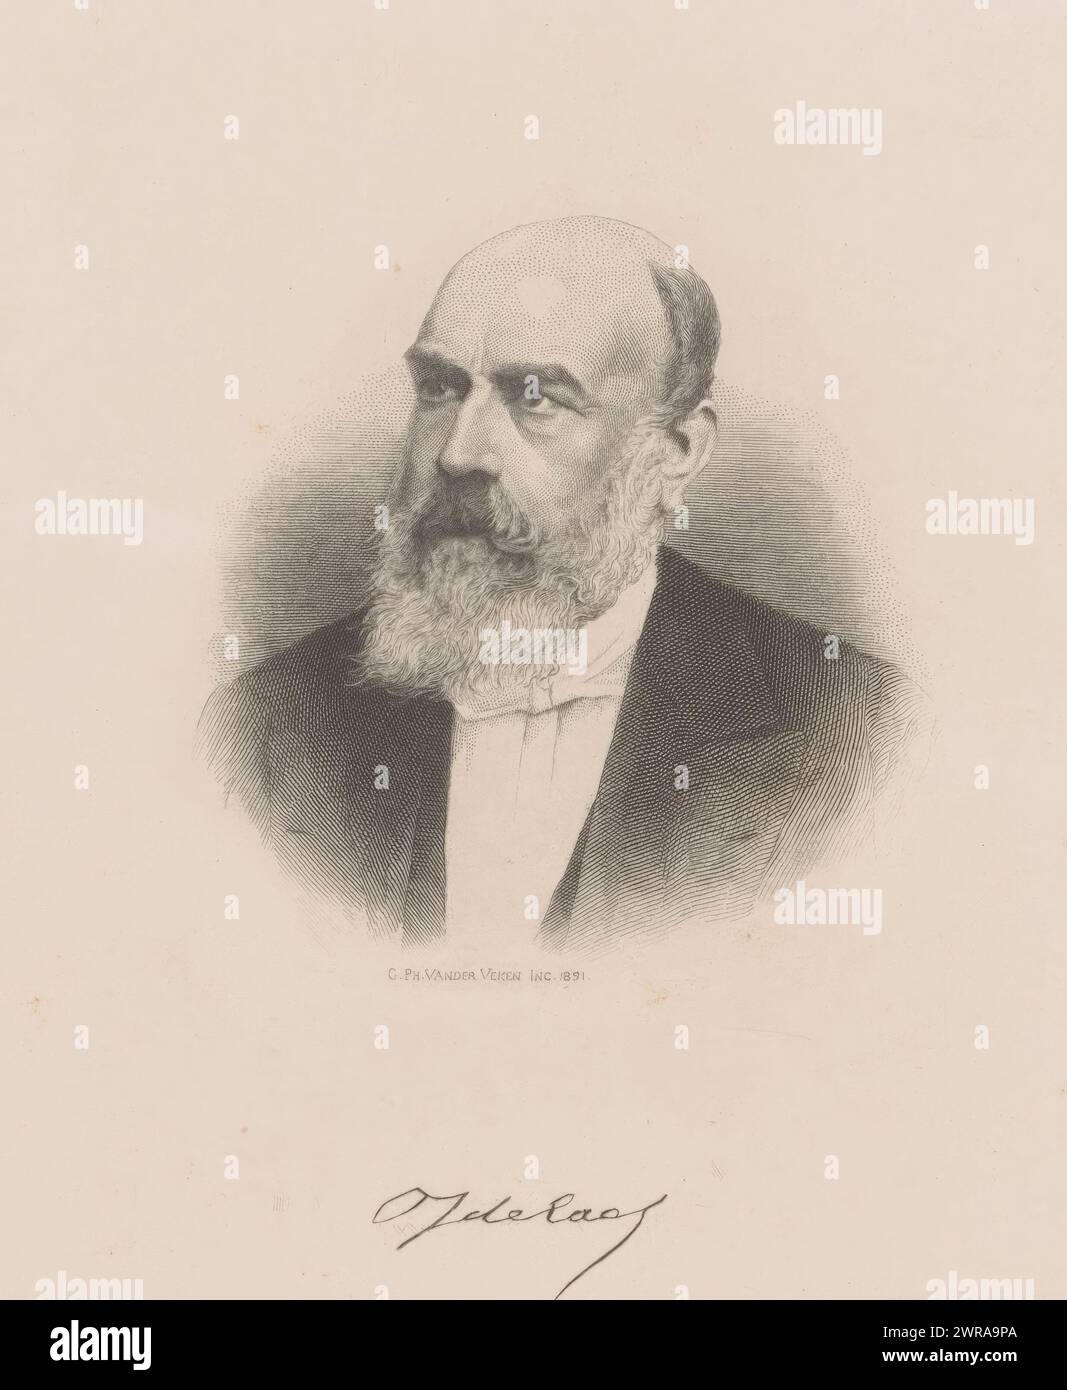 Portrait of Johan Alfried de Laet, JdeLaet (title on object), print maker: Willem Philip van der Veken, 1891, paper, engraving, etching, height 210 mm × width 158 mm, print Stock Photo